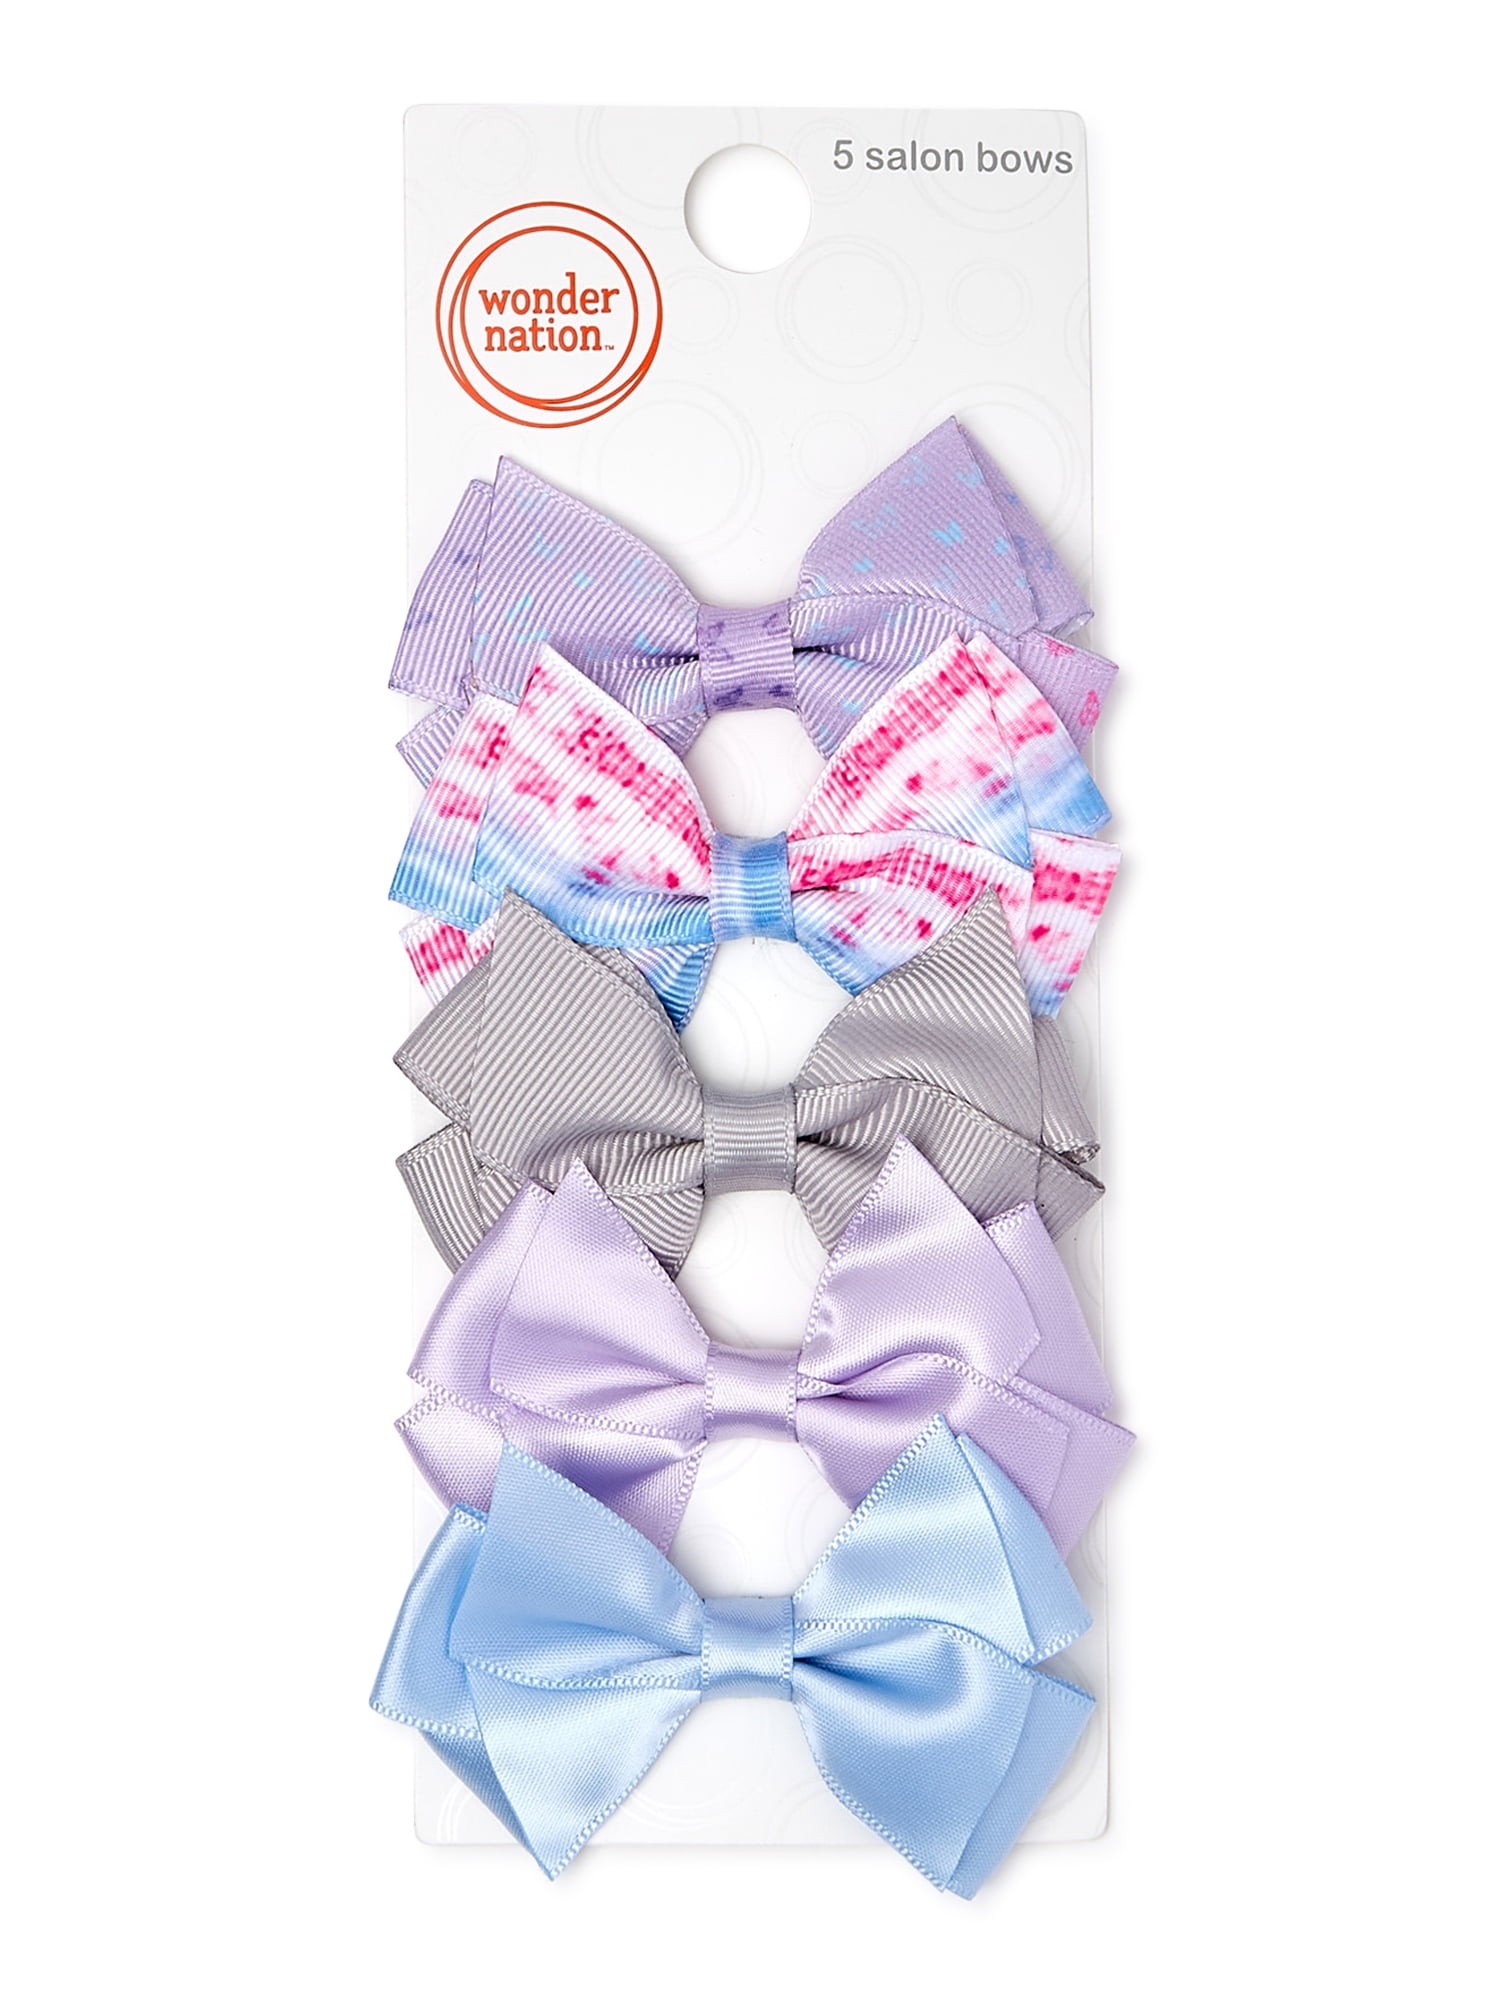 YMHPRIDE 8 Pcs Cute Bunny Ears Headbands Bow hair bands Stripe Spot Headband Hair Accessories for Women and Girls